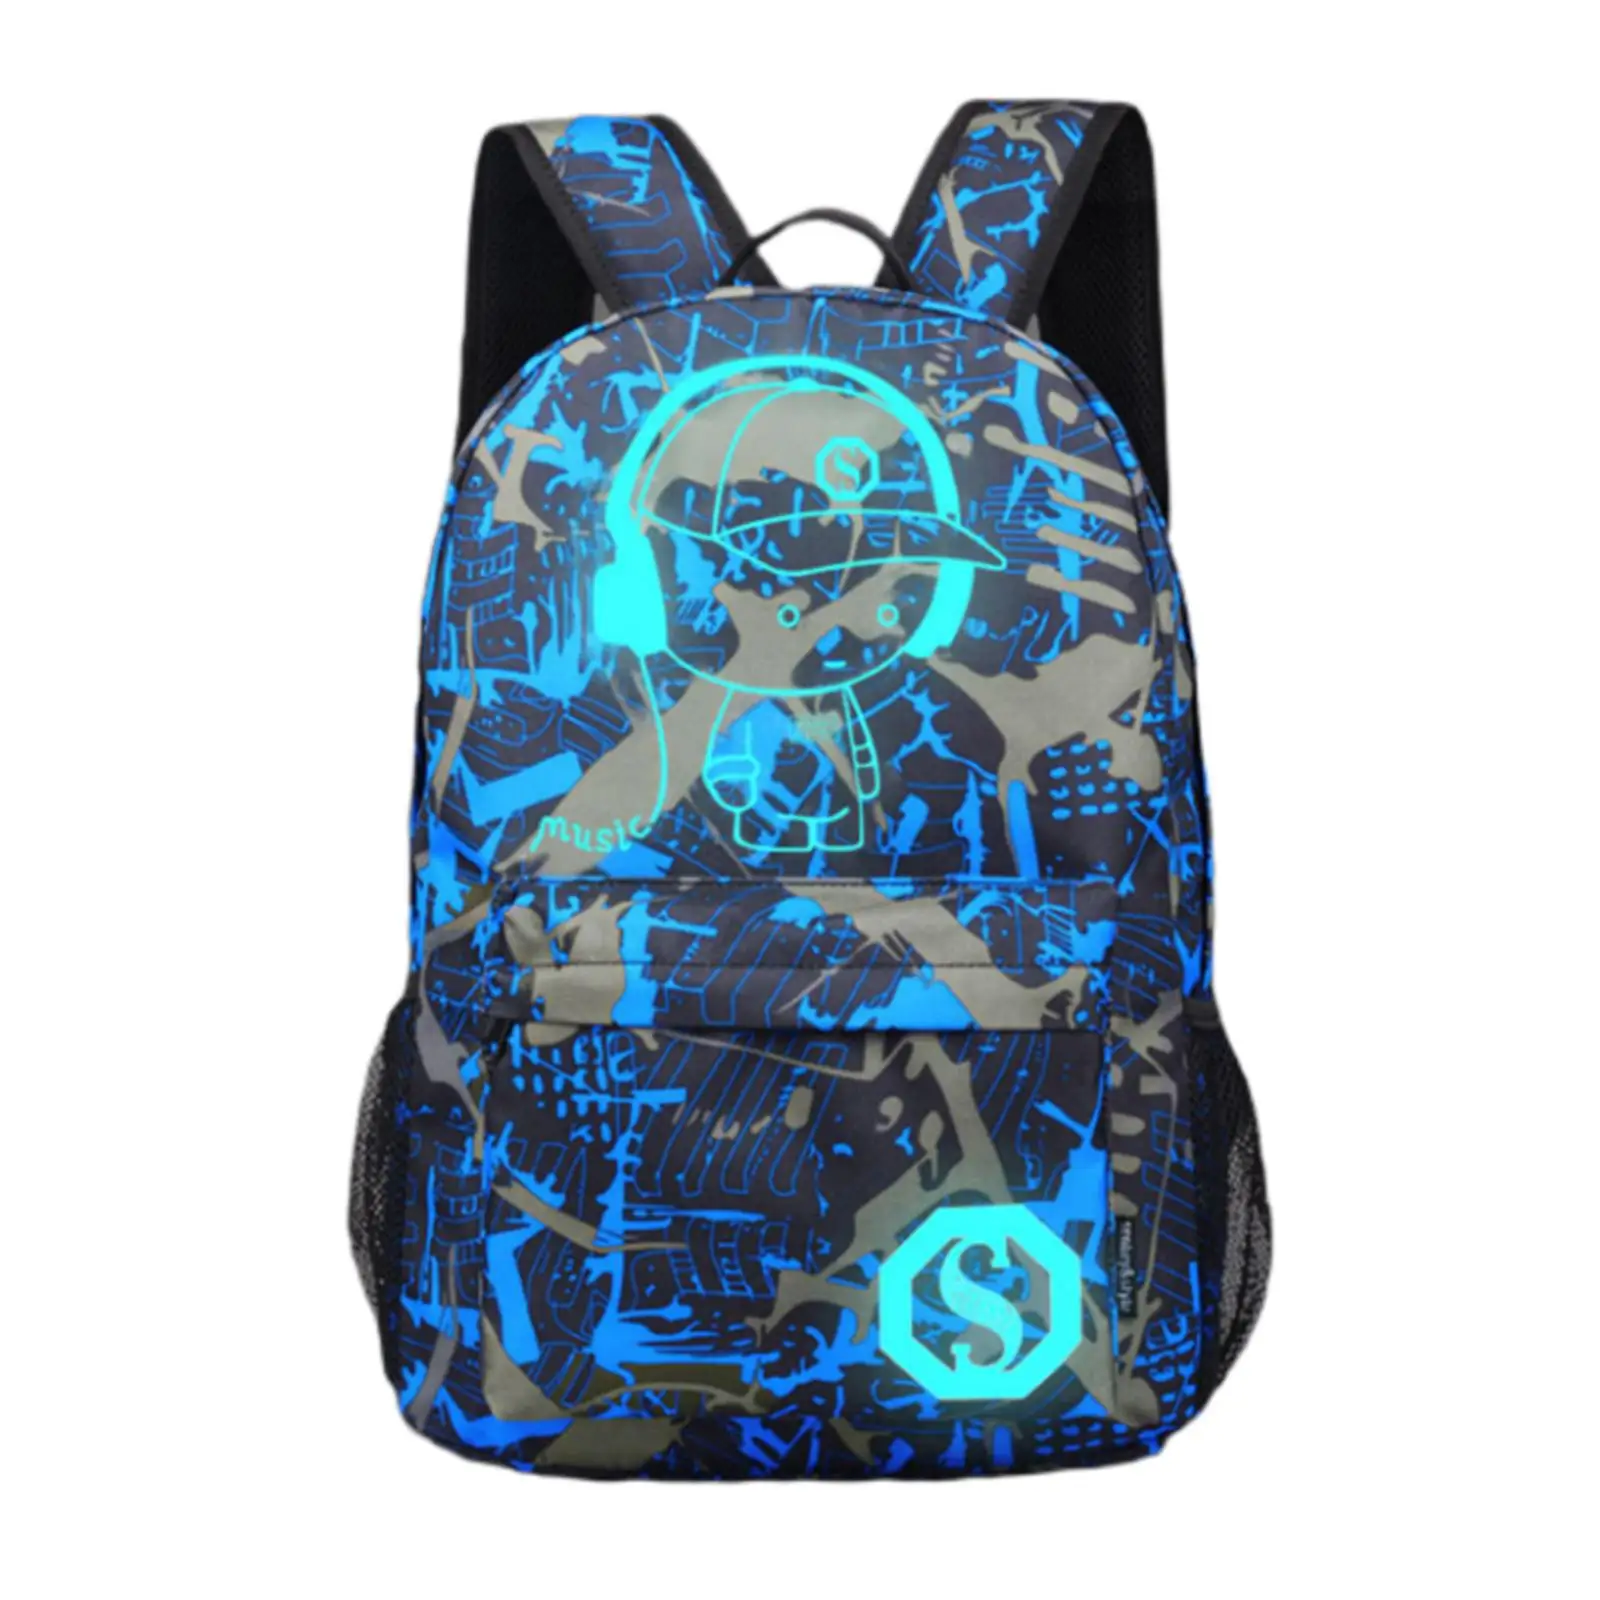 Kids Luminous School Backpack Shoulder Bag Rucksack with USB Charging Port